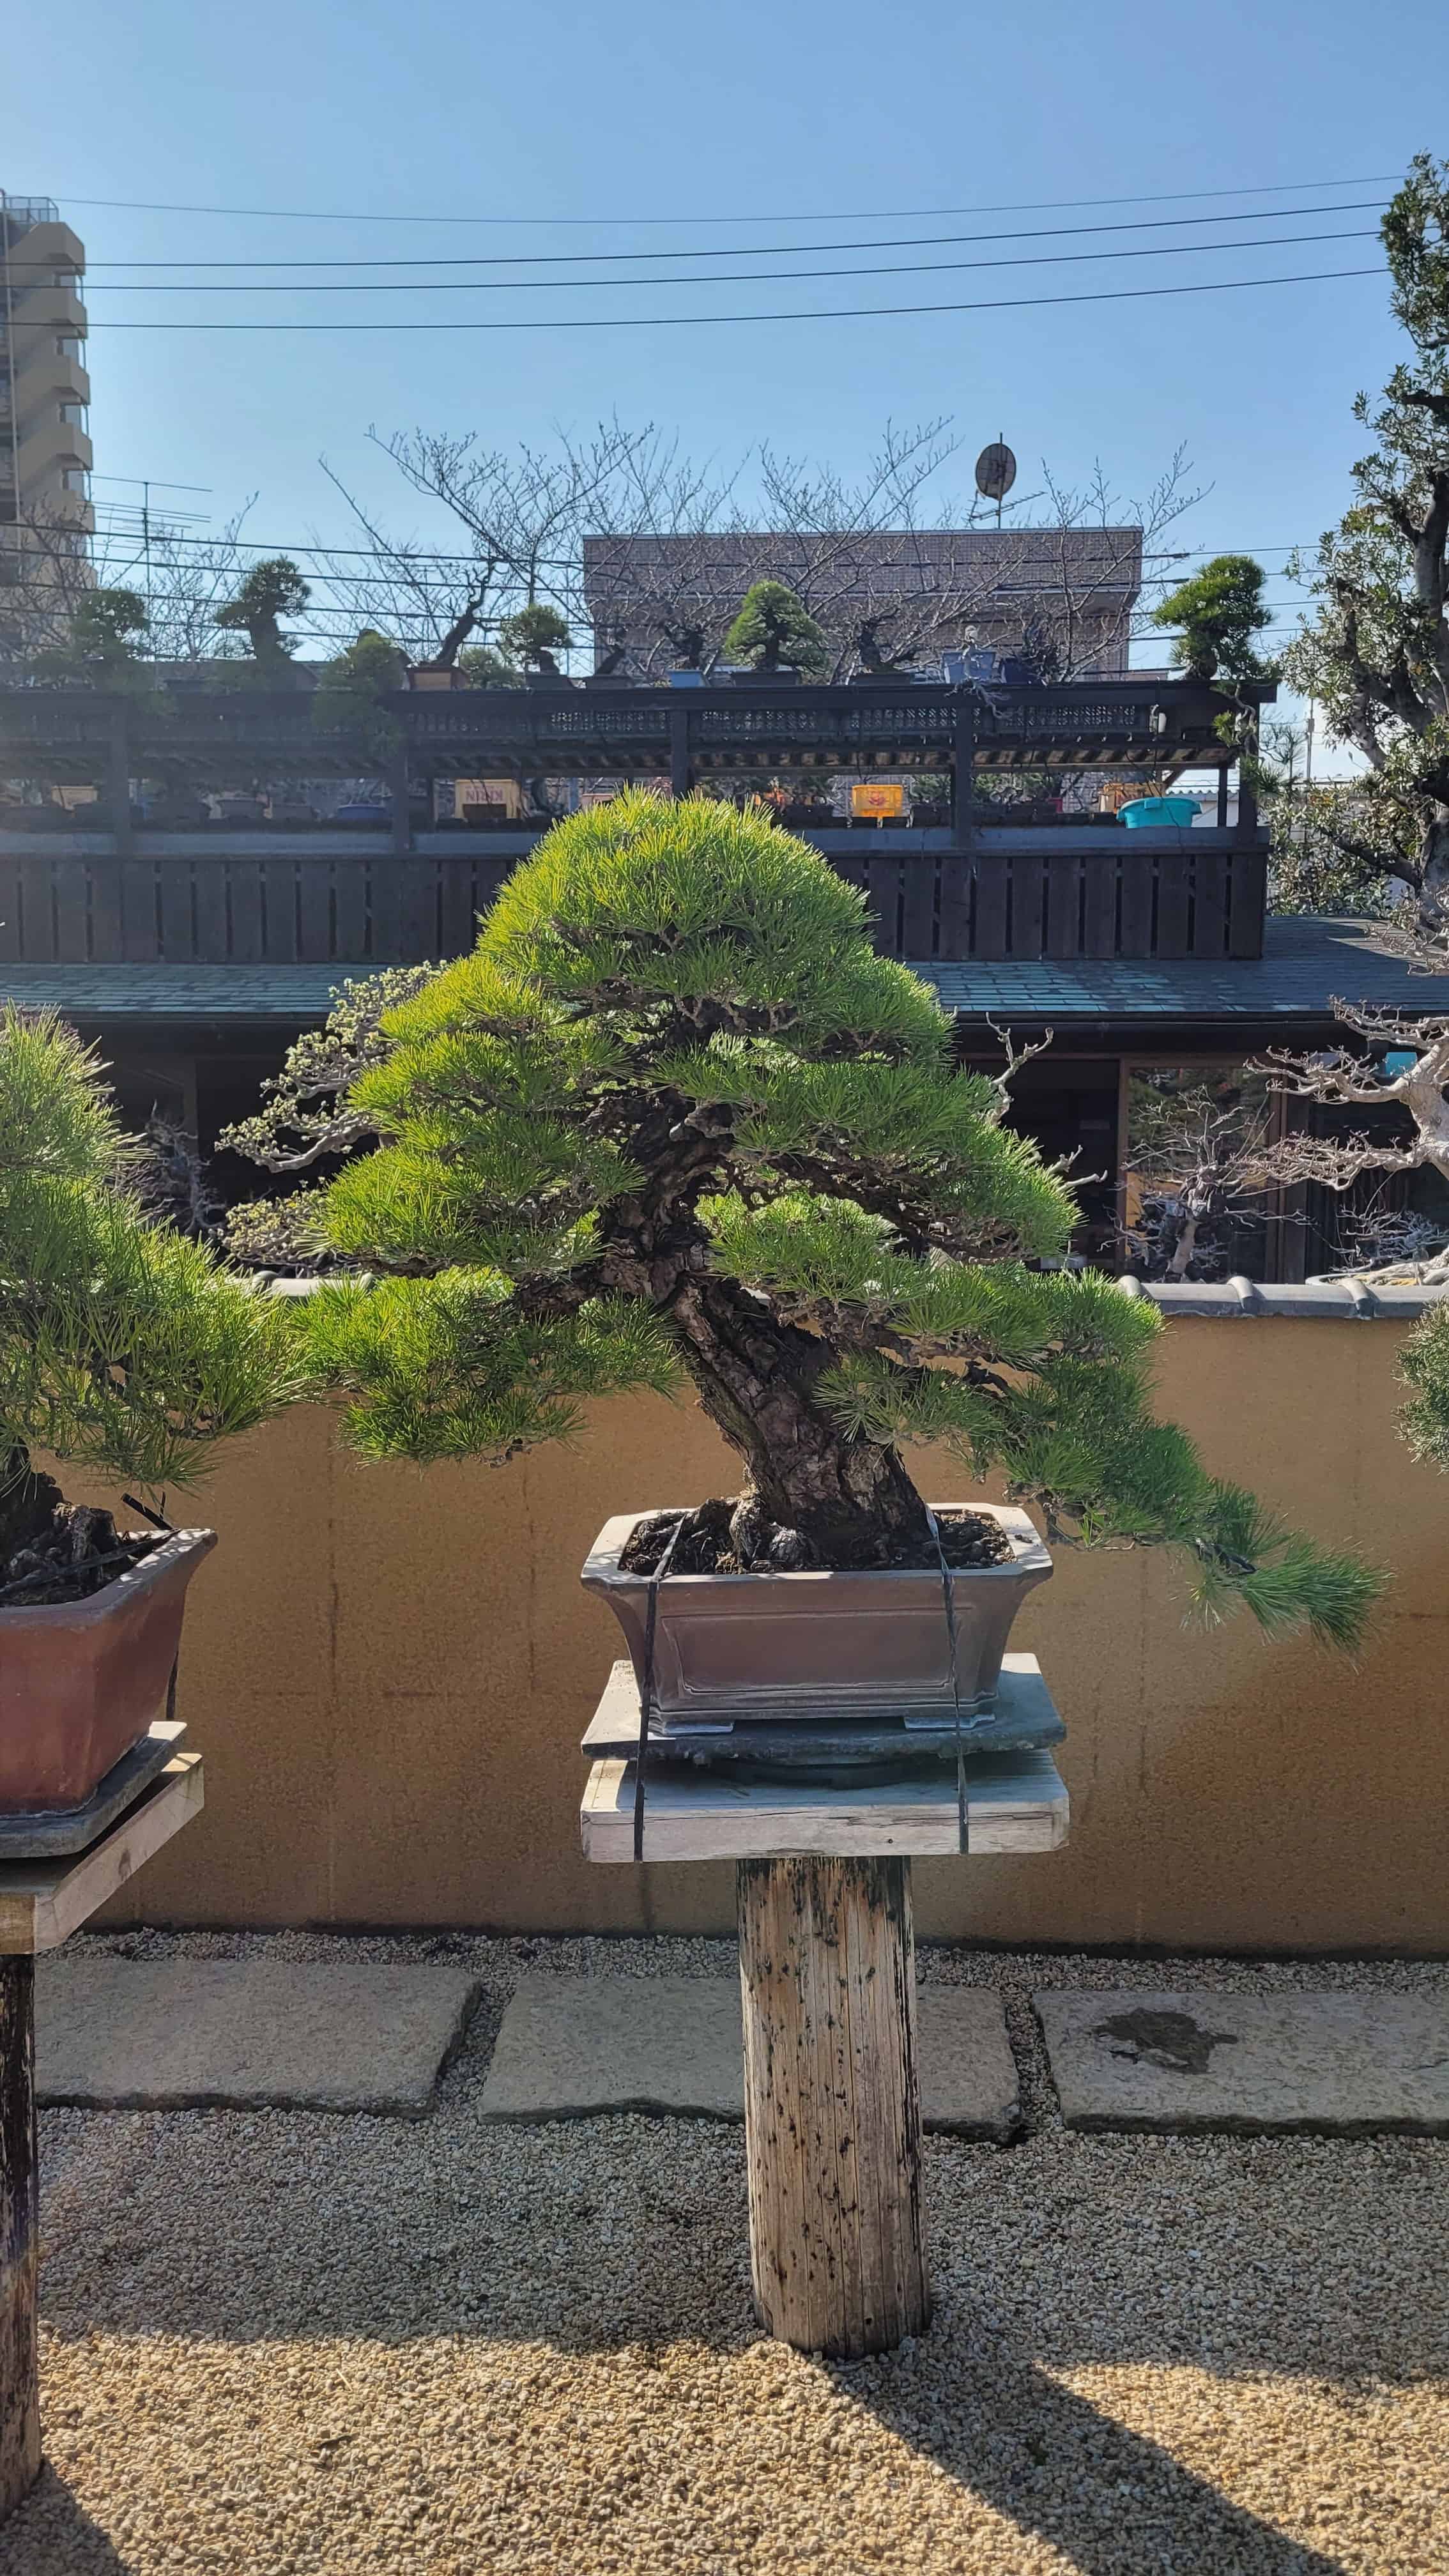 A pine bonsai tree from kobayashi in Japan